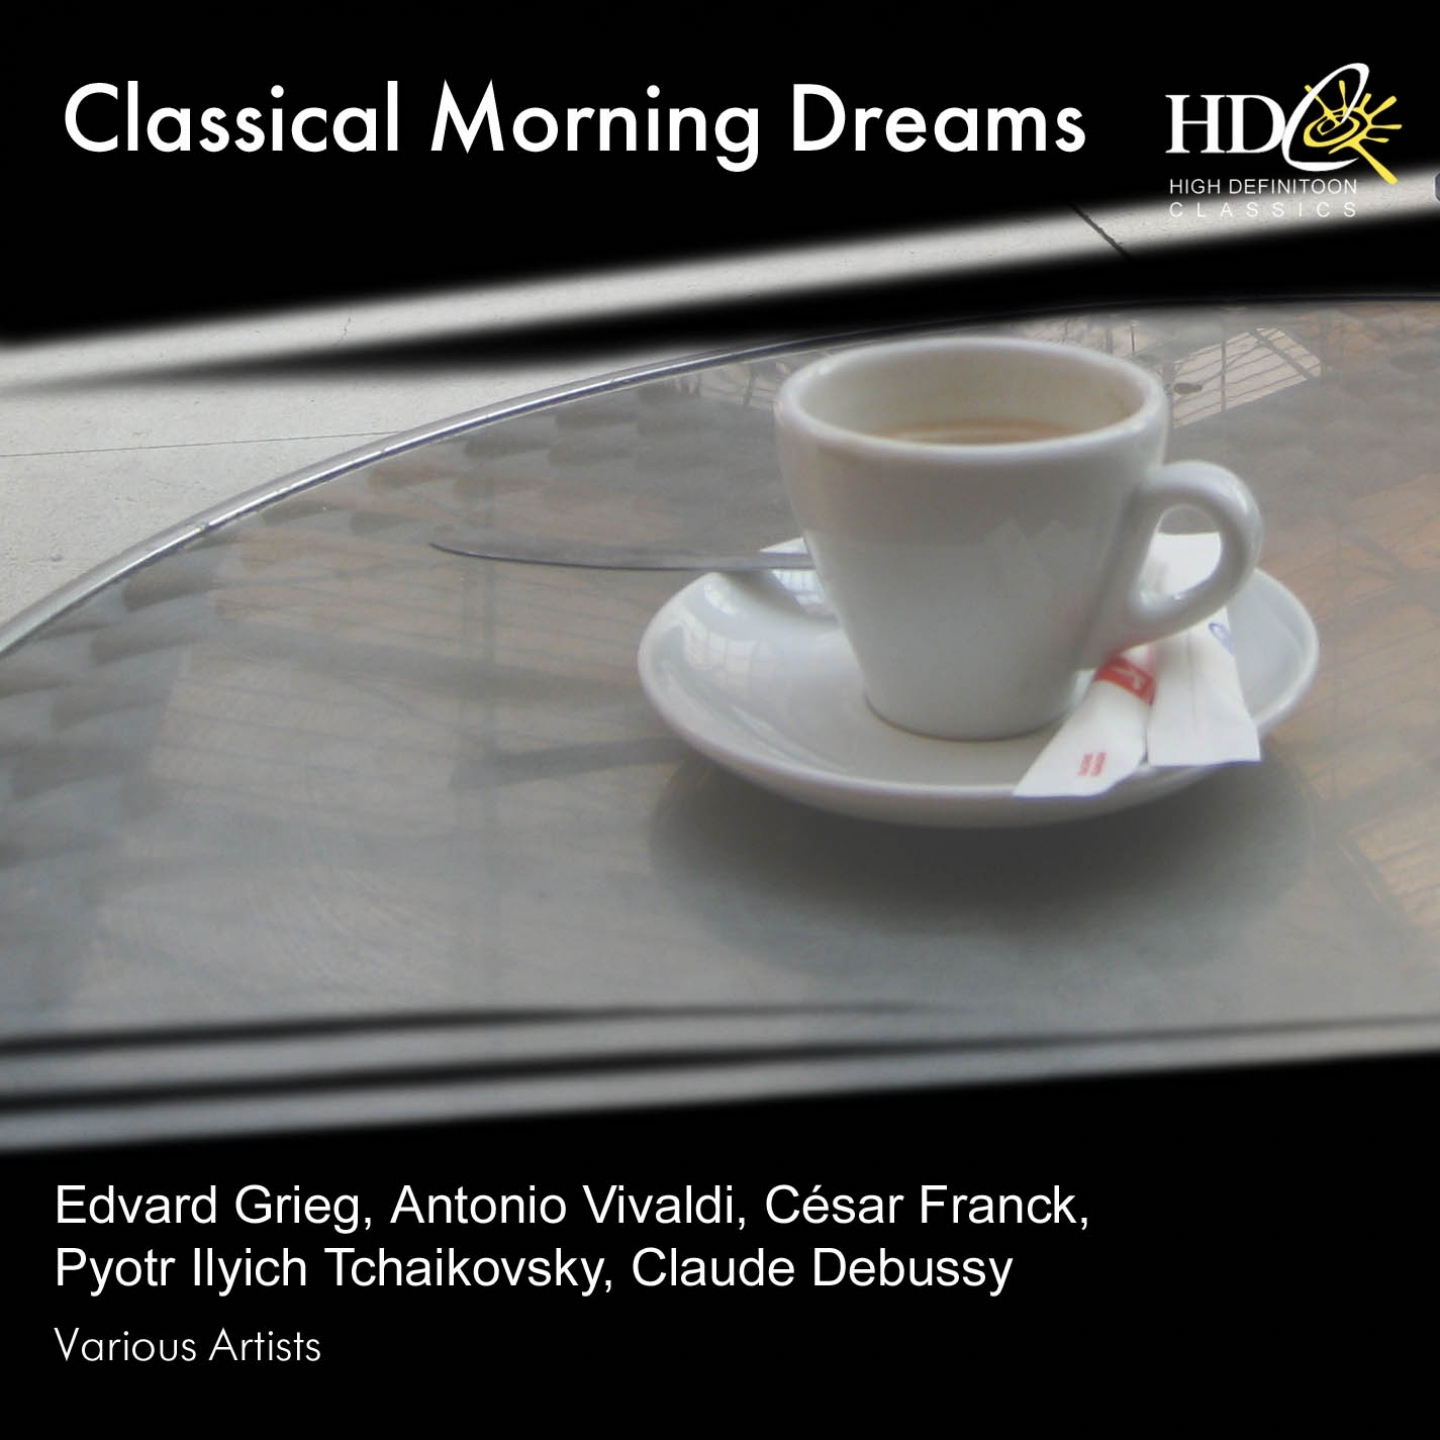 Peer Gynt, Suite No.1, Op. 46: I. Morning Mood, Allegretto pastorale